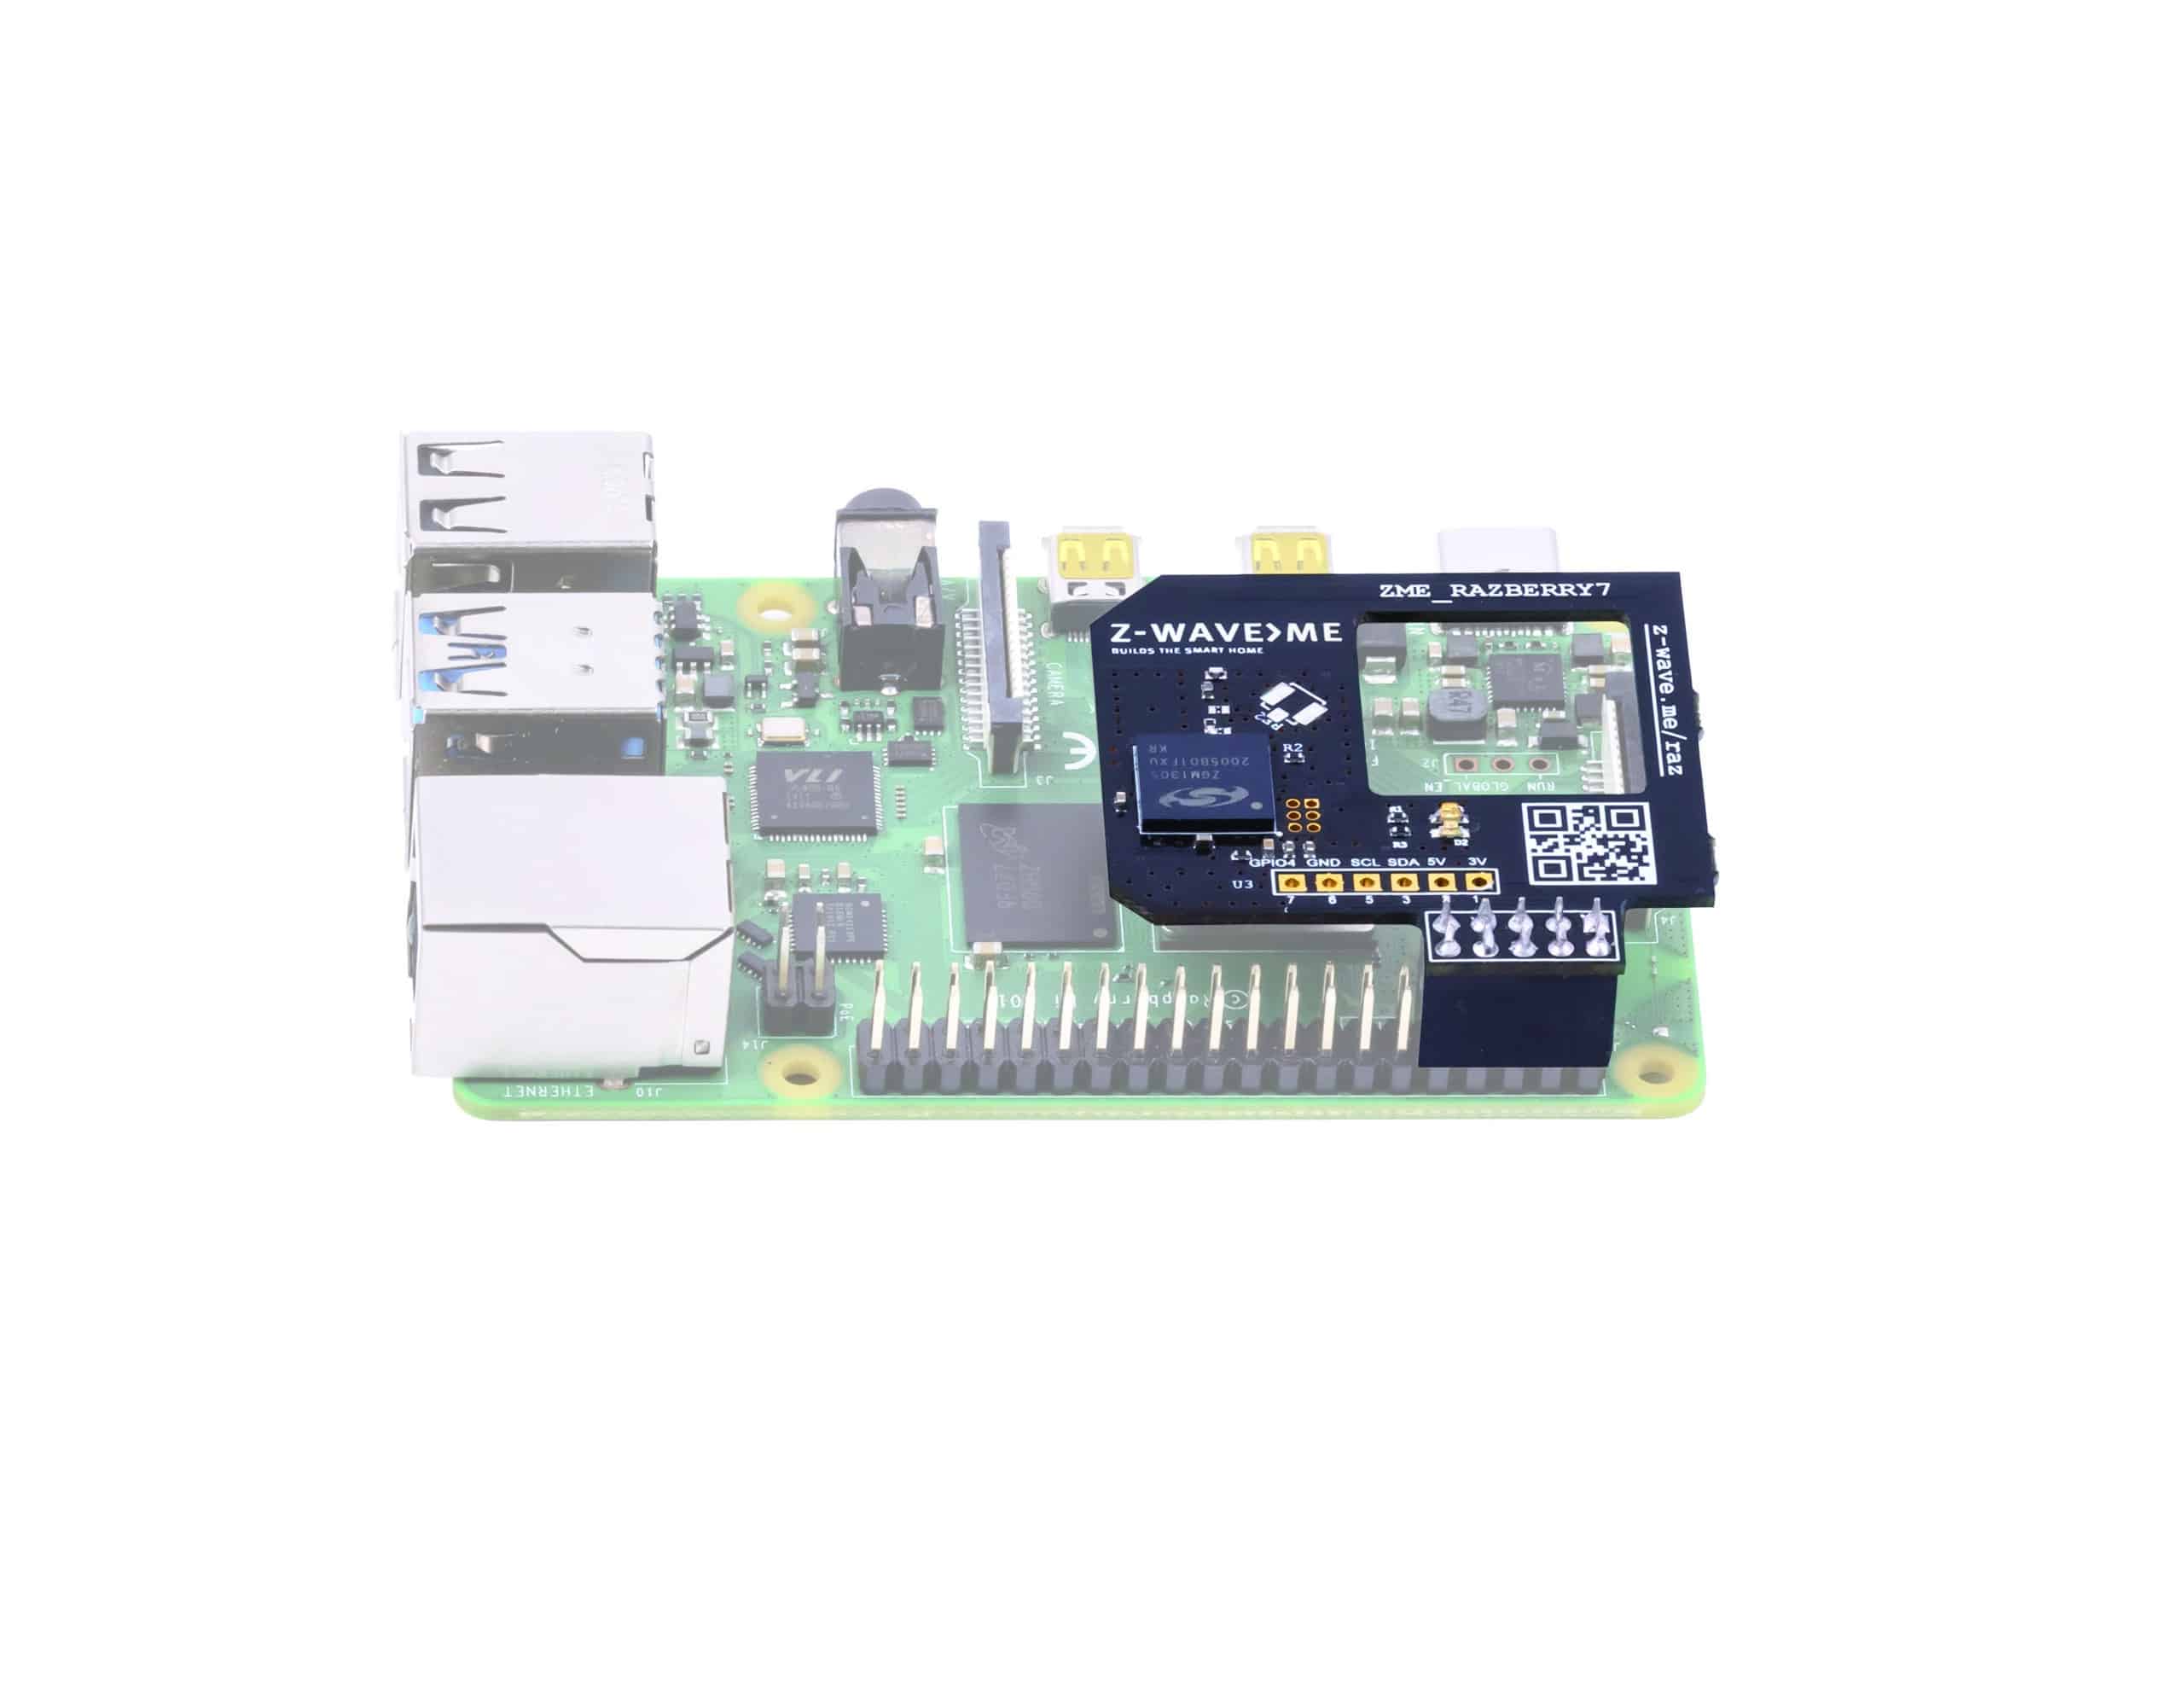 RaZberry 7 – Z-Wave Plug-On Module for Raspberry Pi